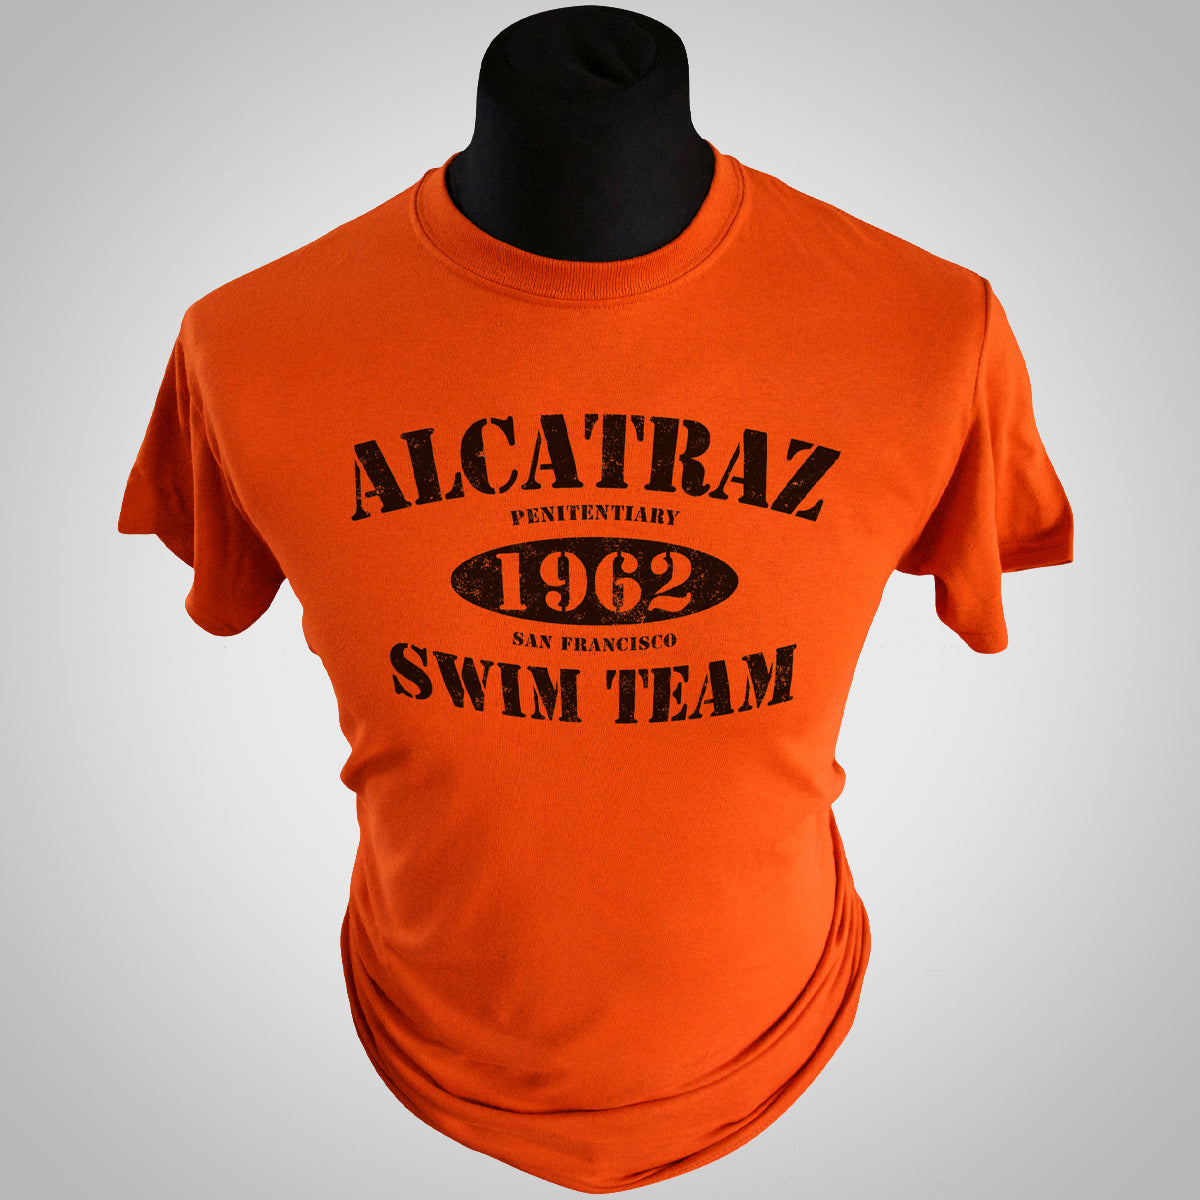 Alcatraz Swim Team T Shirt (Colour Options)